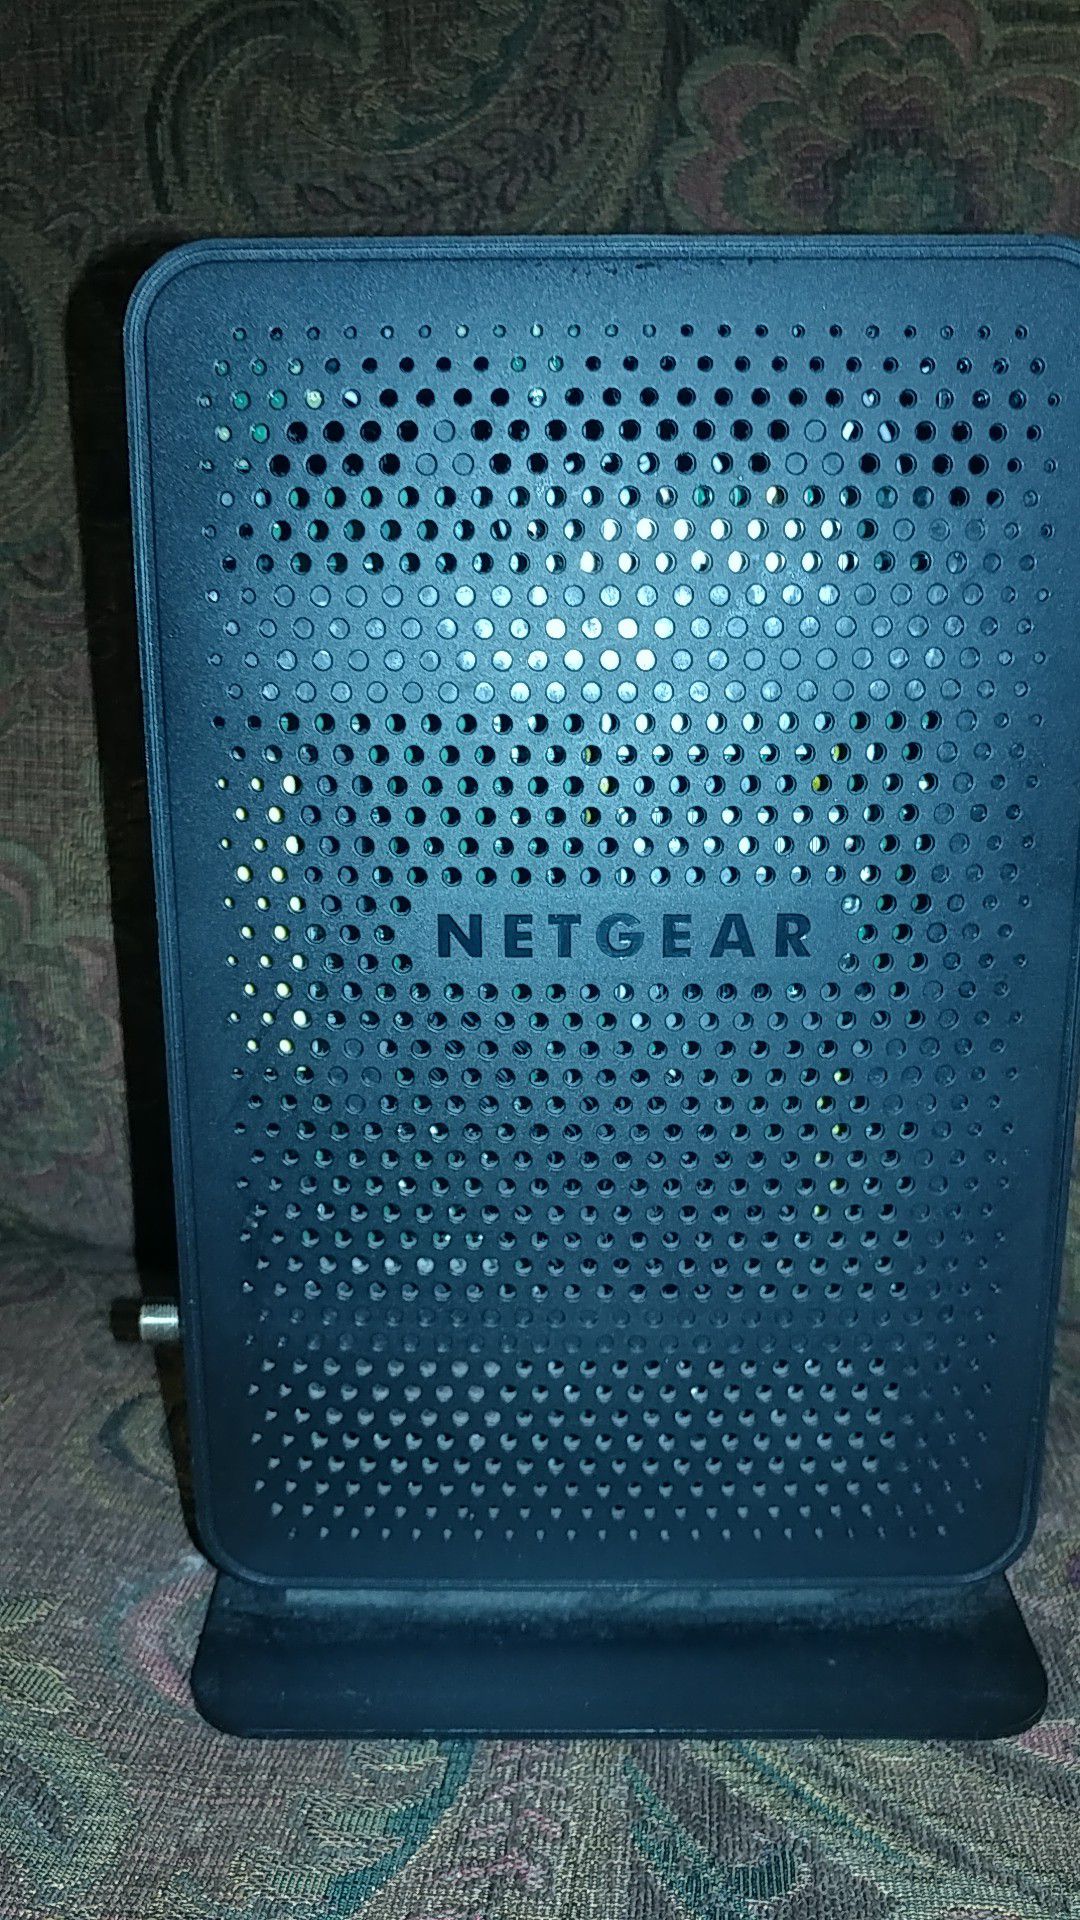 Netgear N900